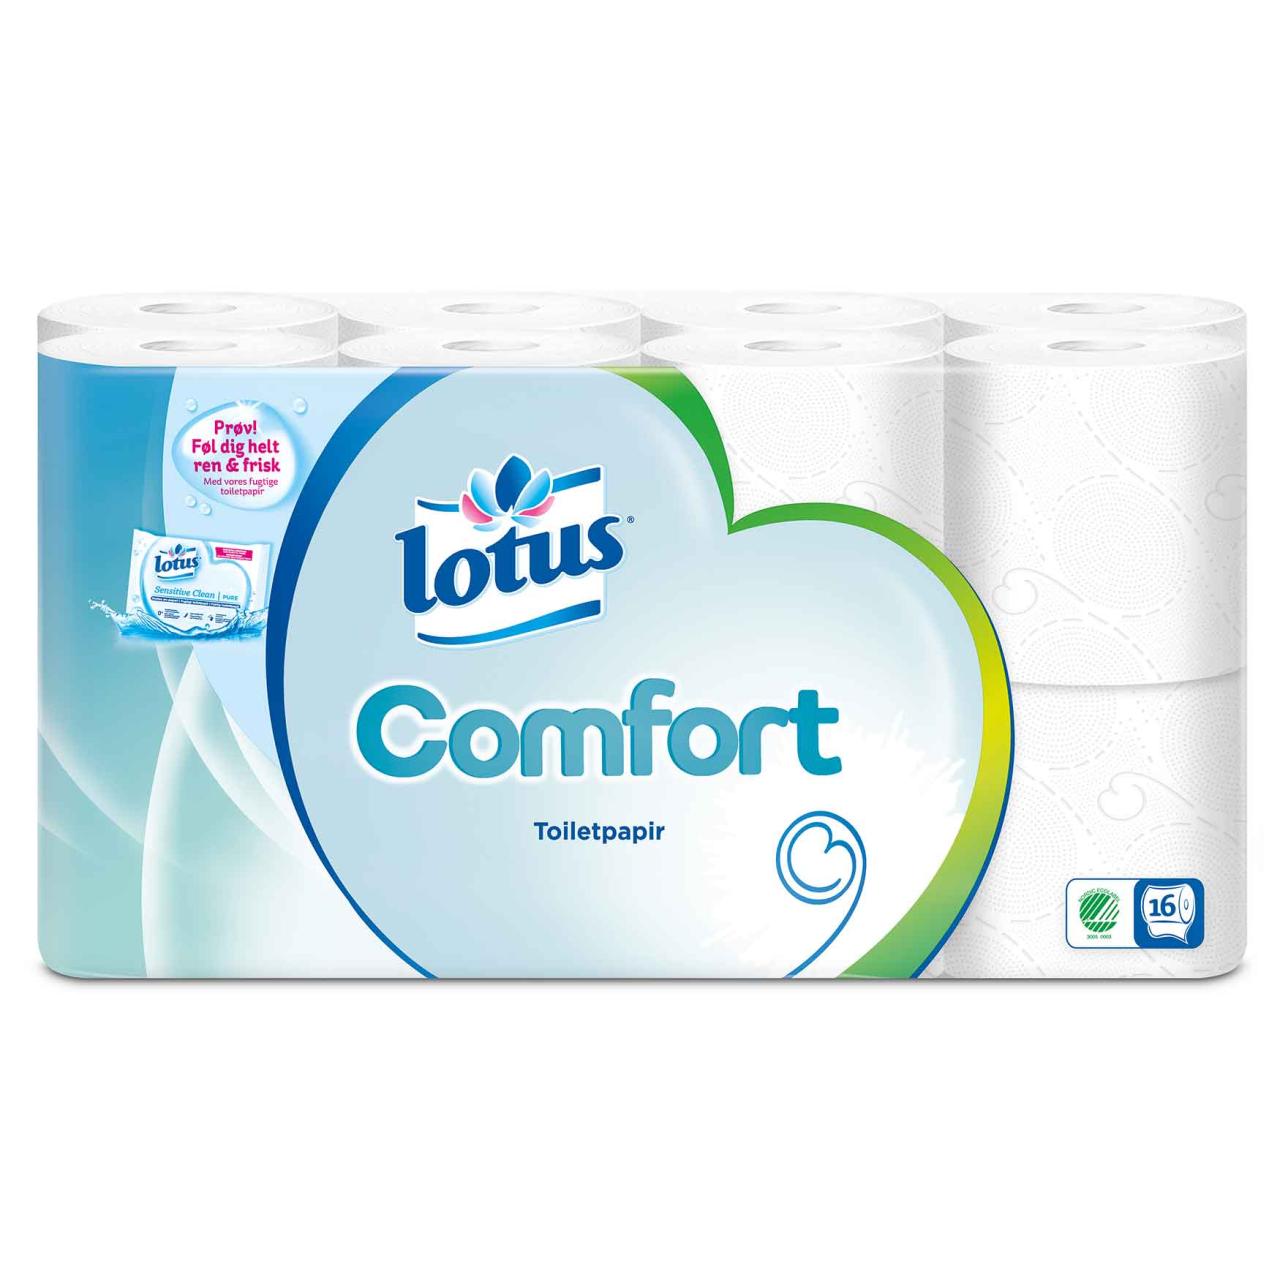 * Lotus Comfort Toiletpapir/Toilettenpapier 3lagig 16x155 Blatt